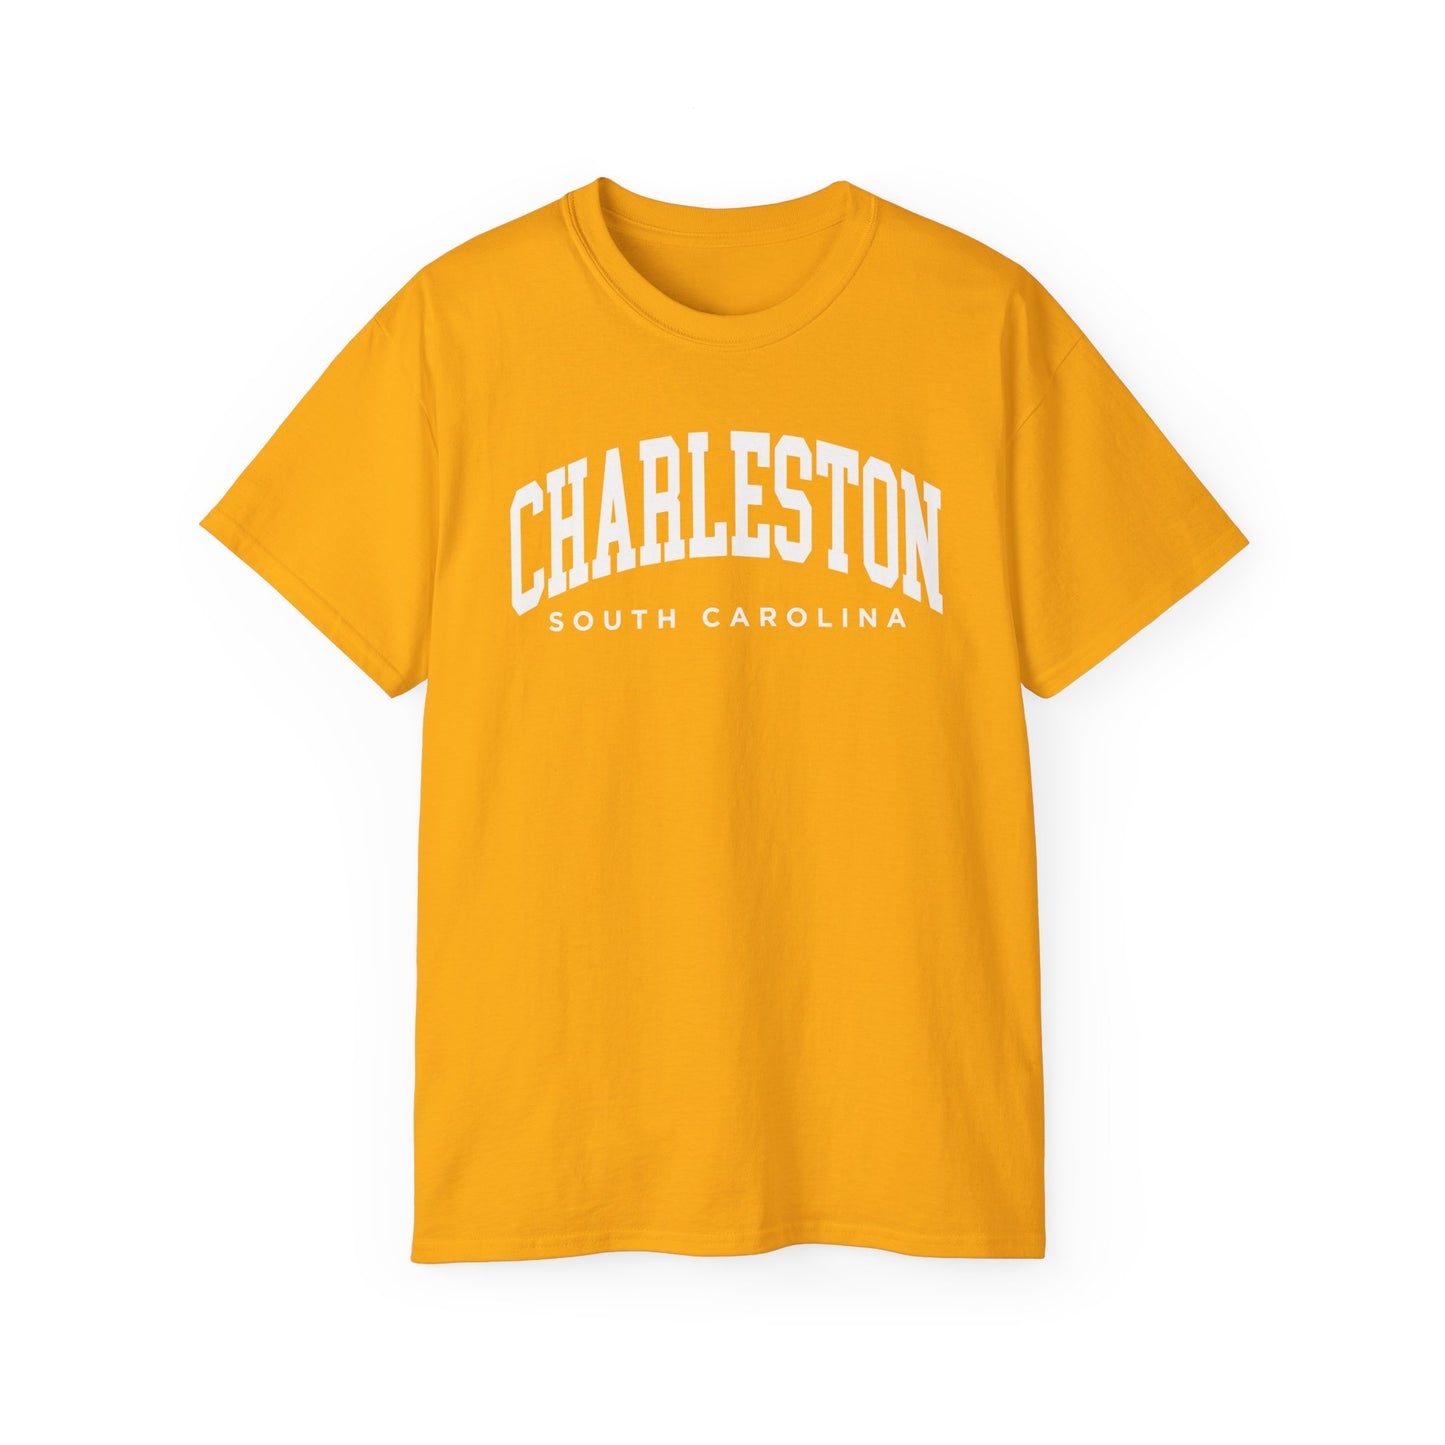 Charleston South Carolina Tee